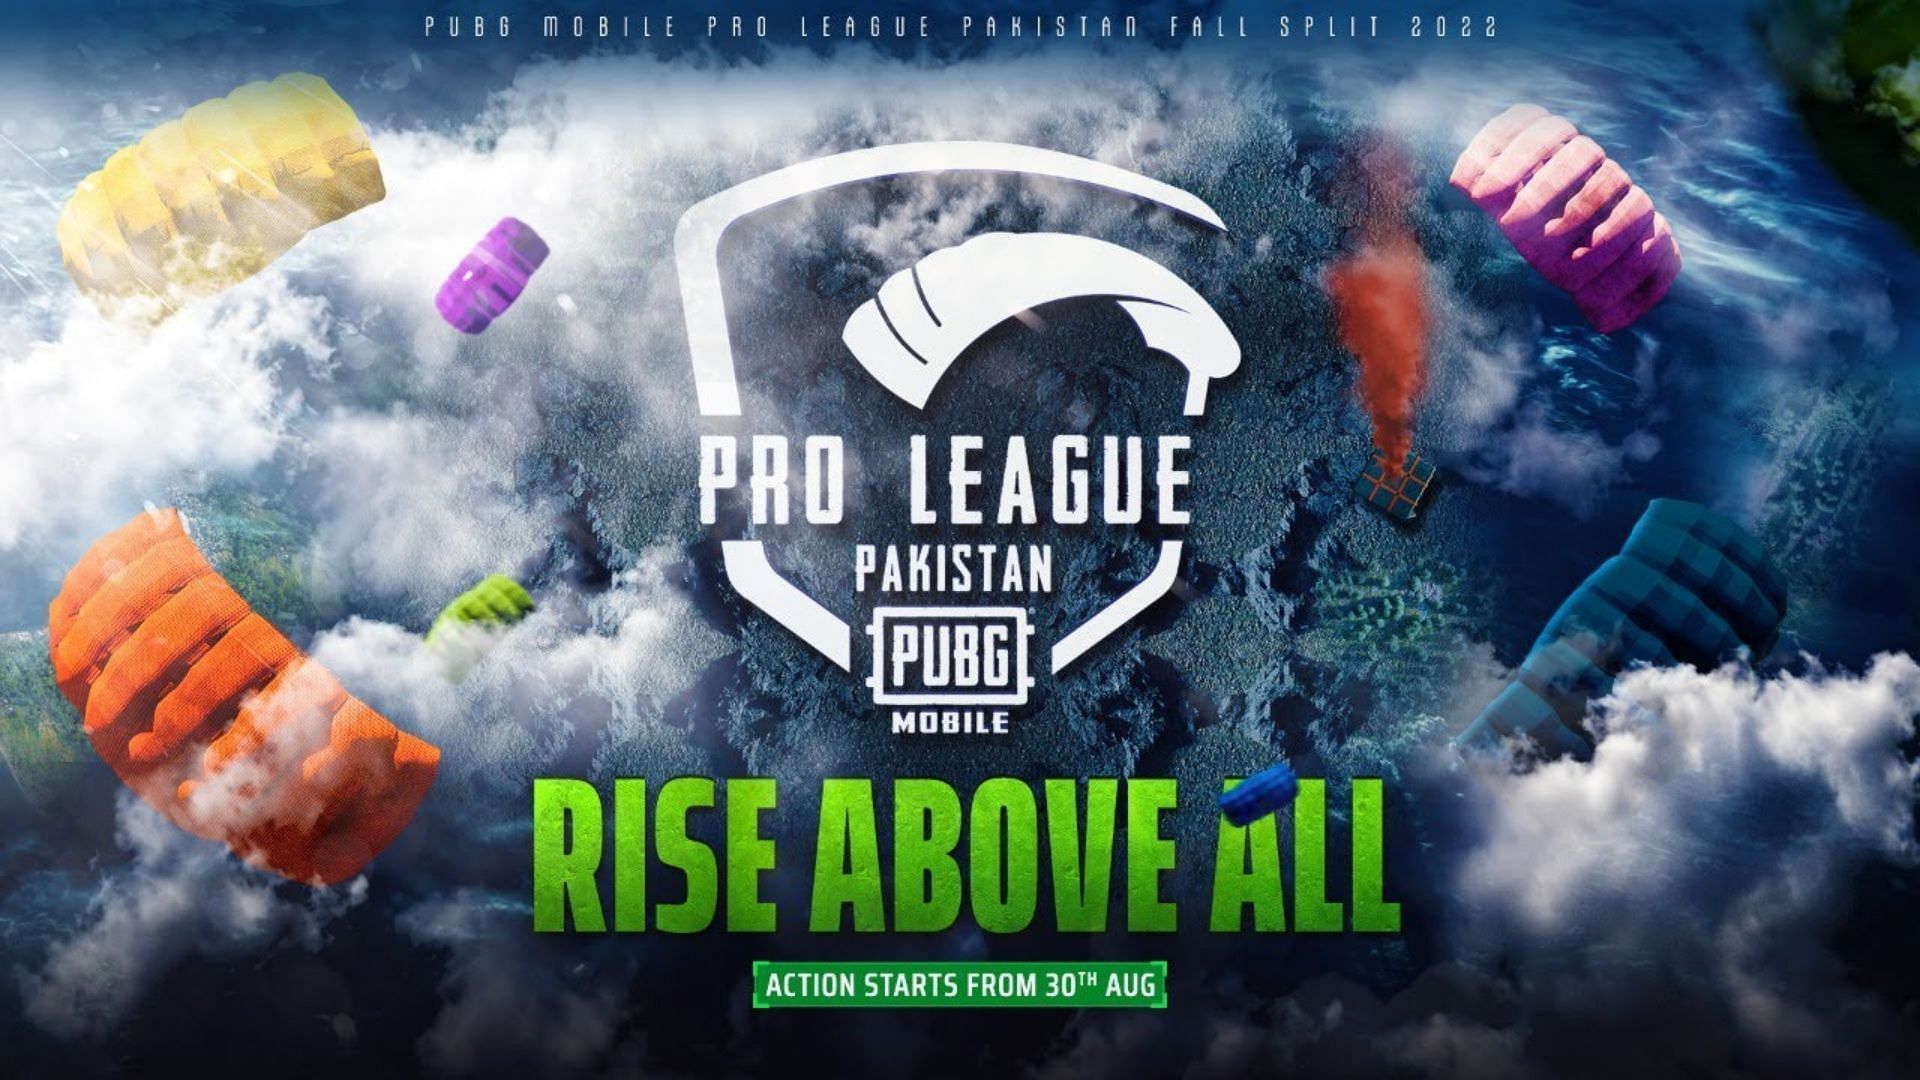 PMPL Pakistan Fall begins on August 30 (Image via PUBG Mobile)